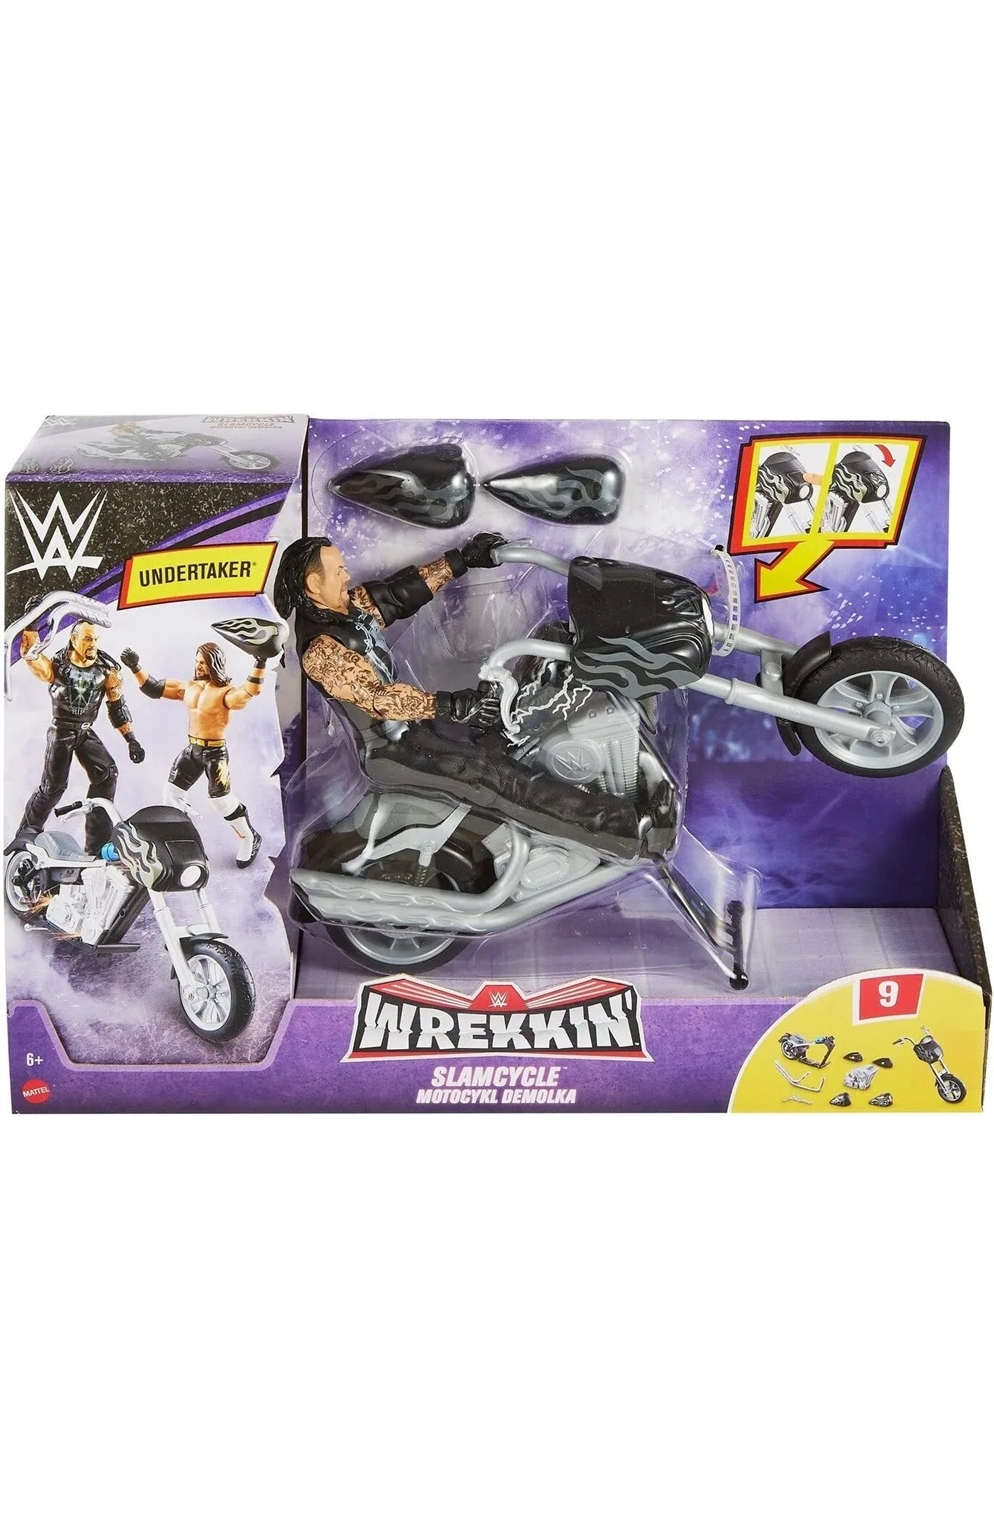 Wwe Wrekkin - Slamcycle Playset Featuring The Undertaker!